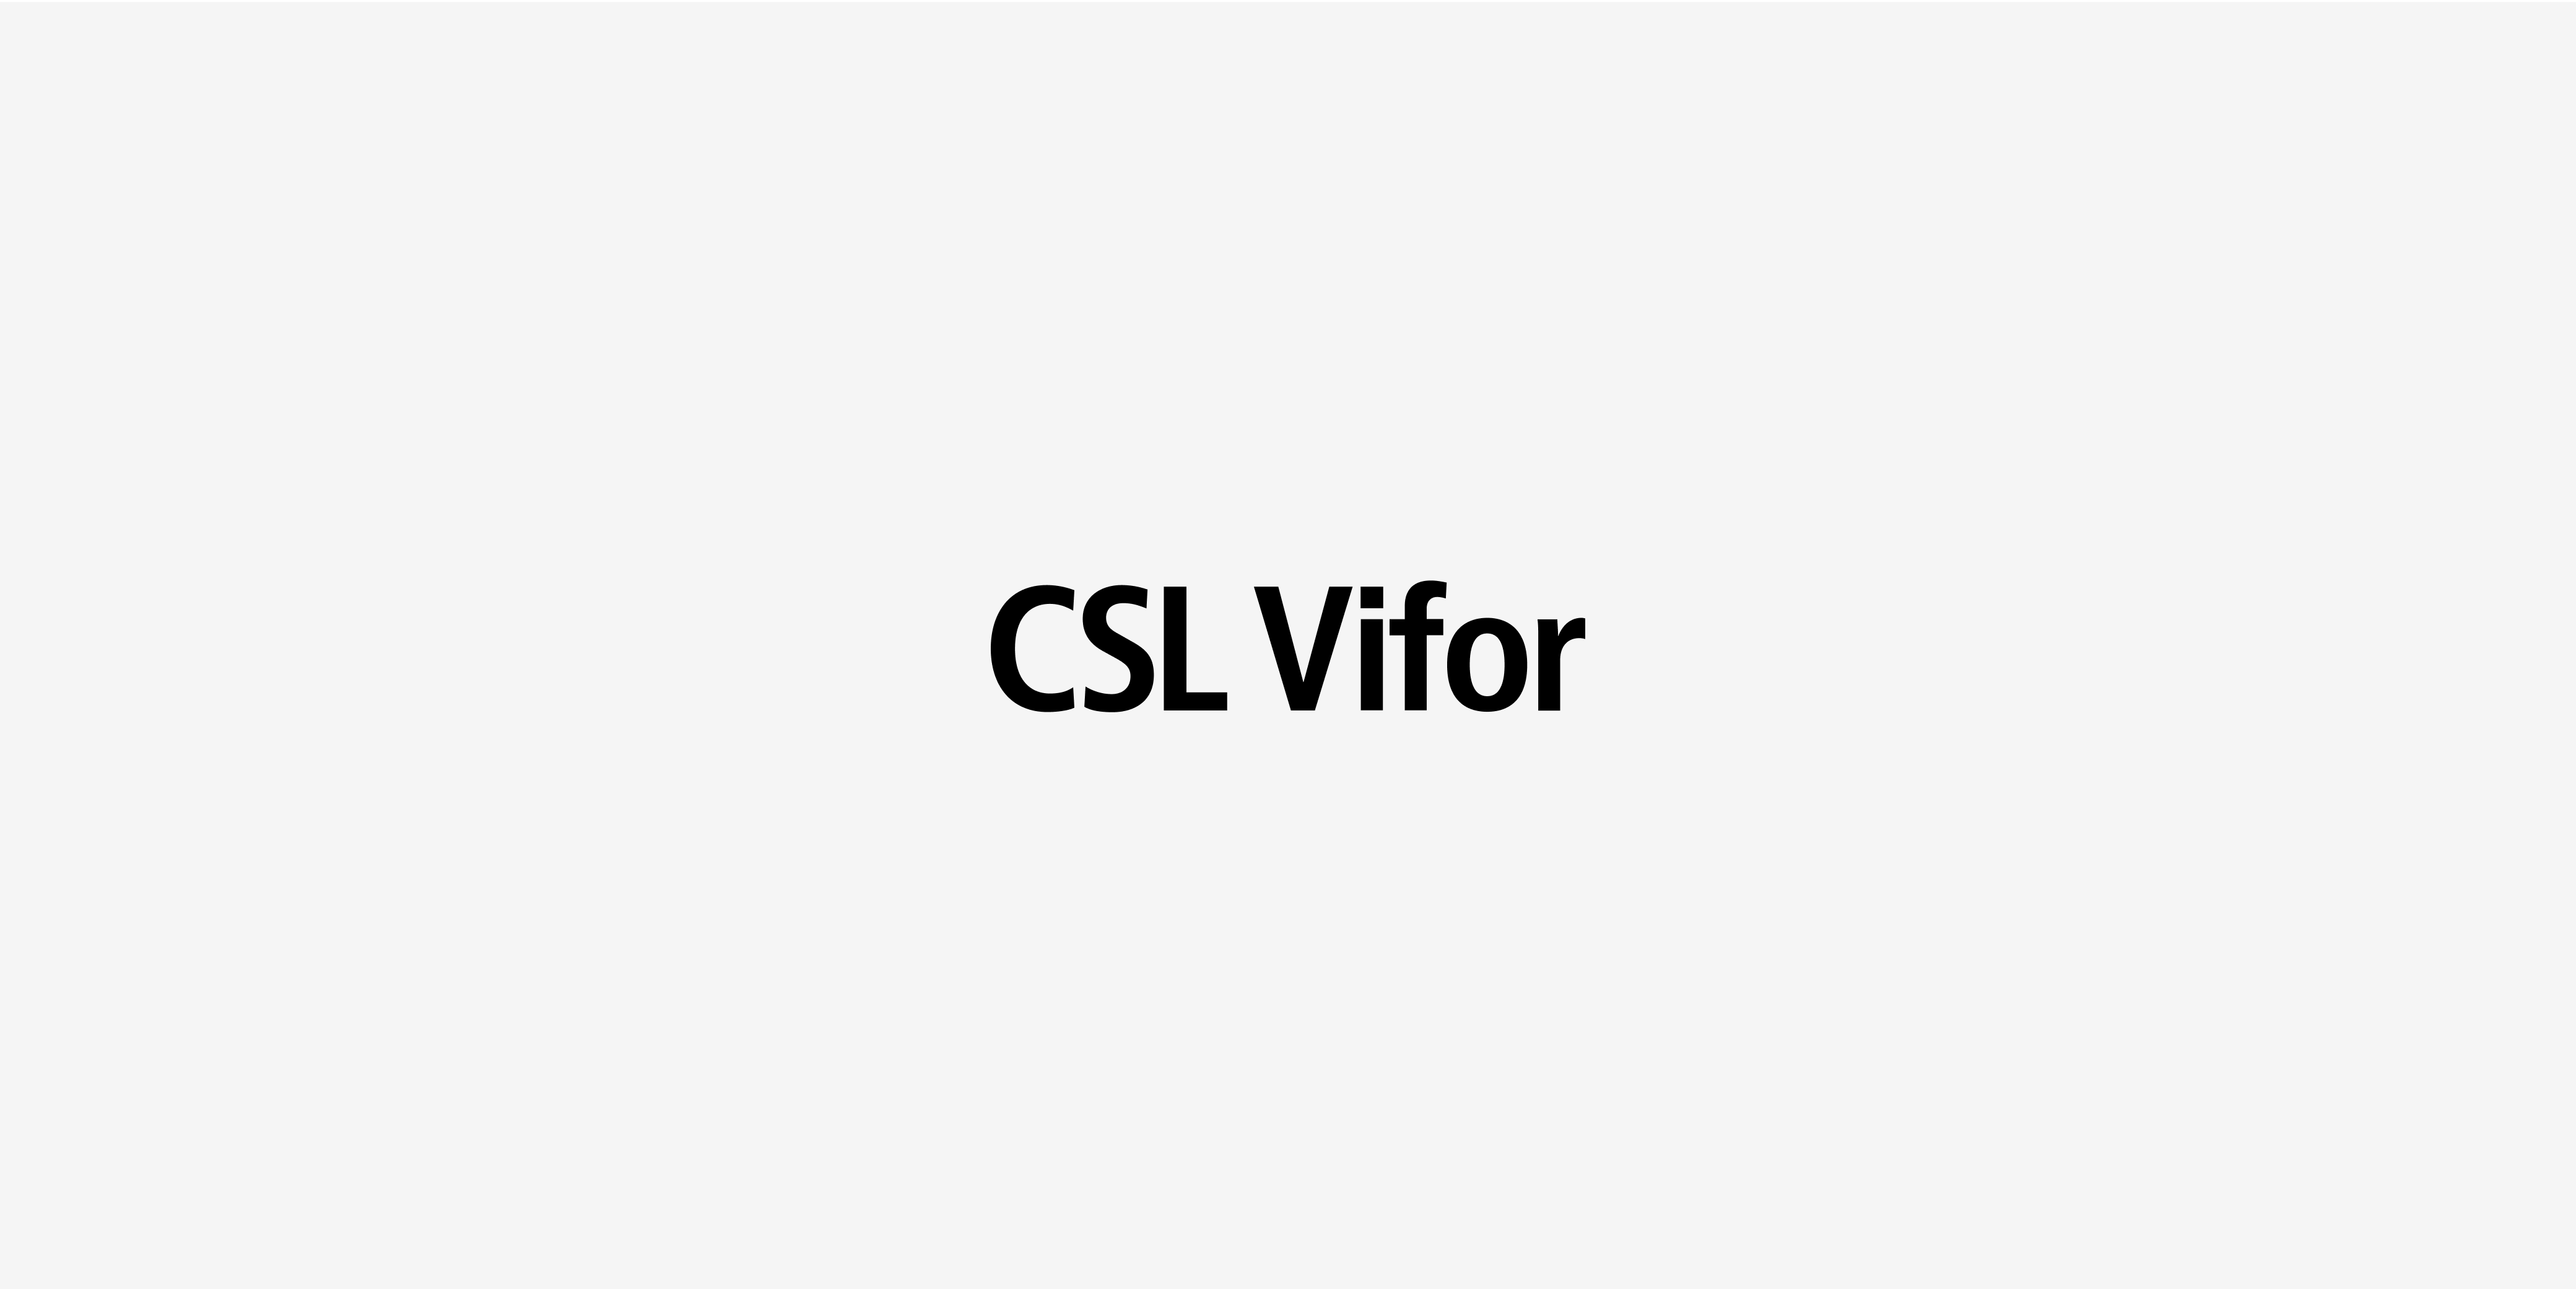 CSL Vifor Image